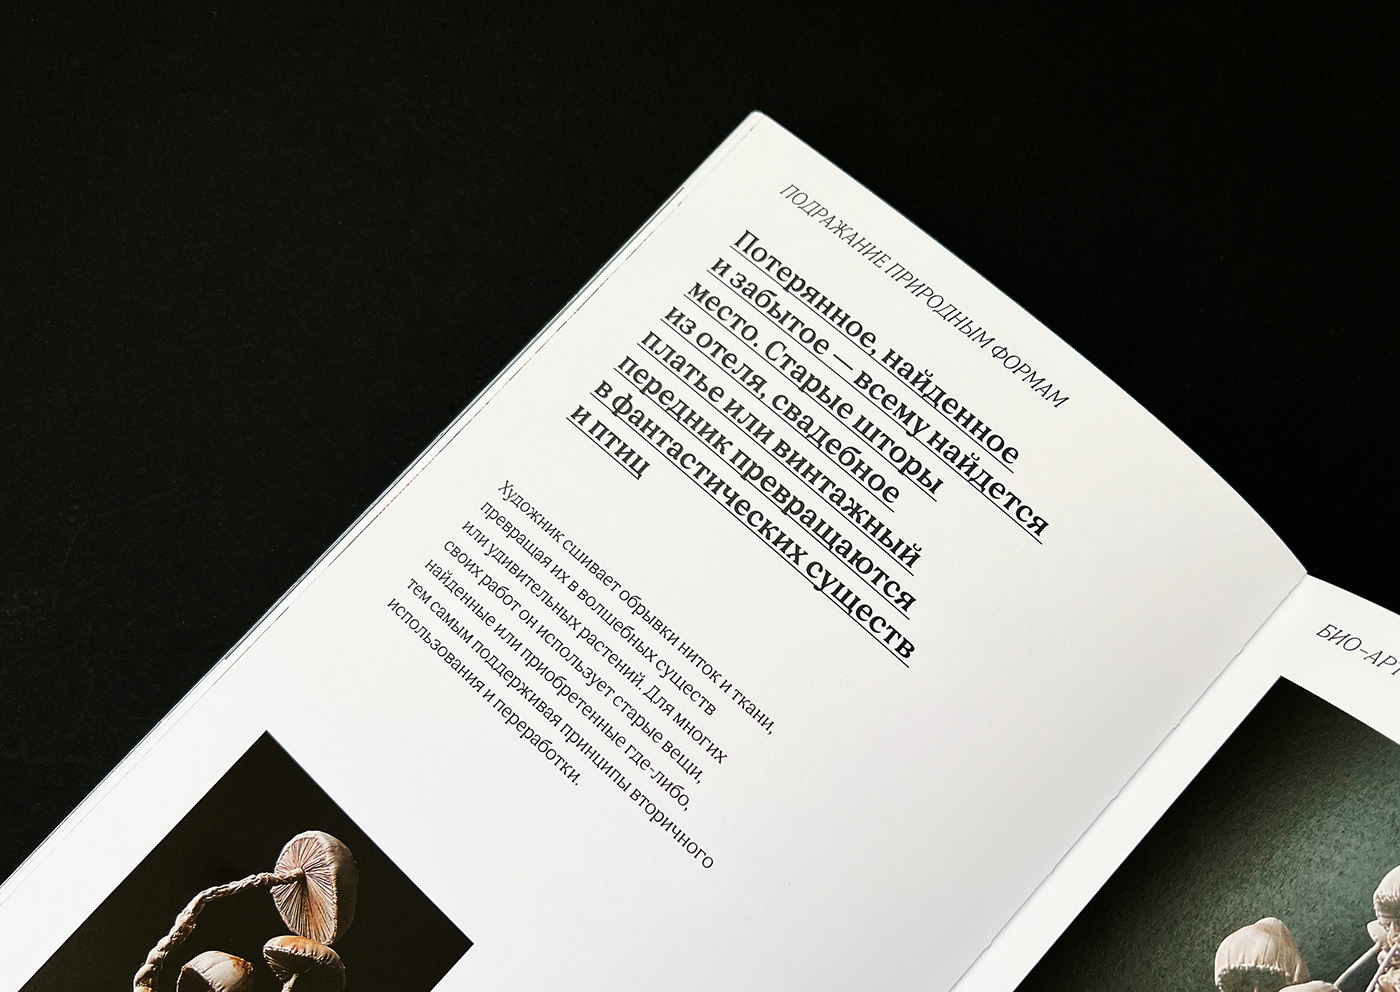 BIO ART bioart book book design typography   VISUAL STUDY верстка книги Дизайн книги книга